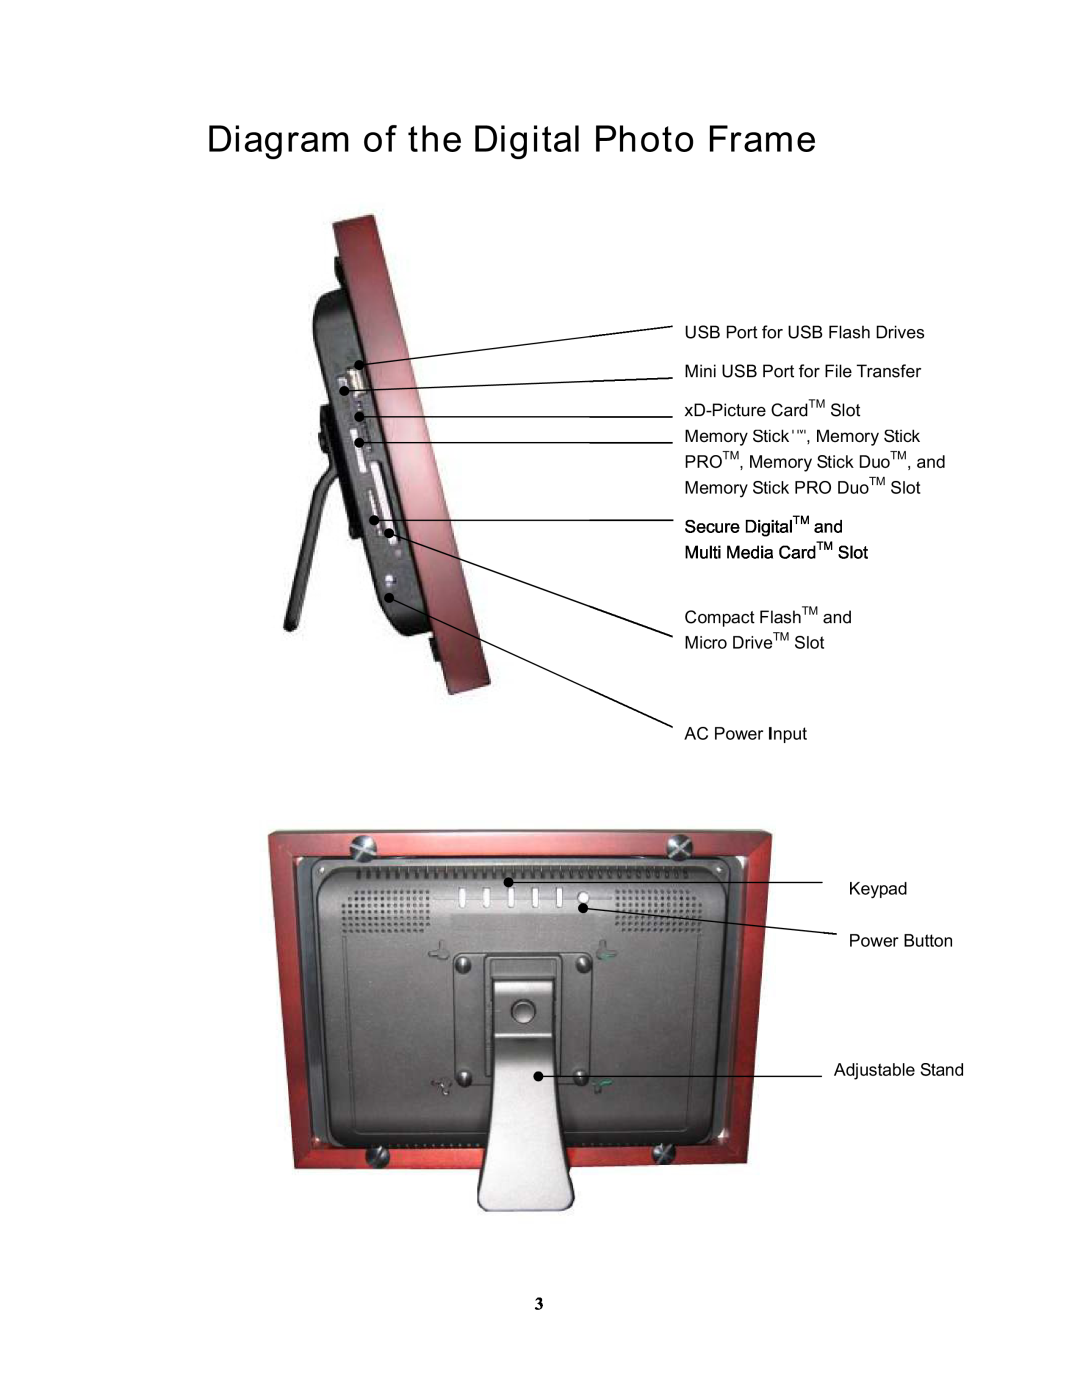 Westinghouse DPF-1021 Diagram of the Digital Photo Frame, USB Port for USB Flash Drives Mini USB Port for File Transfer 